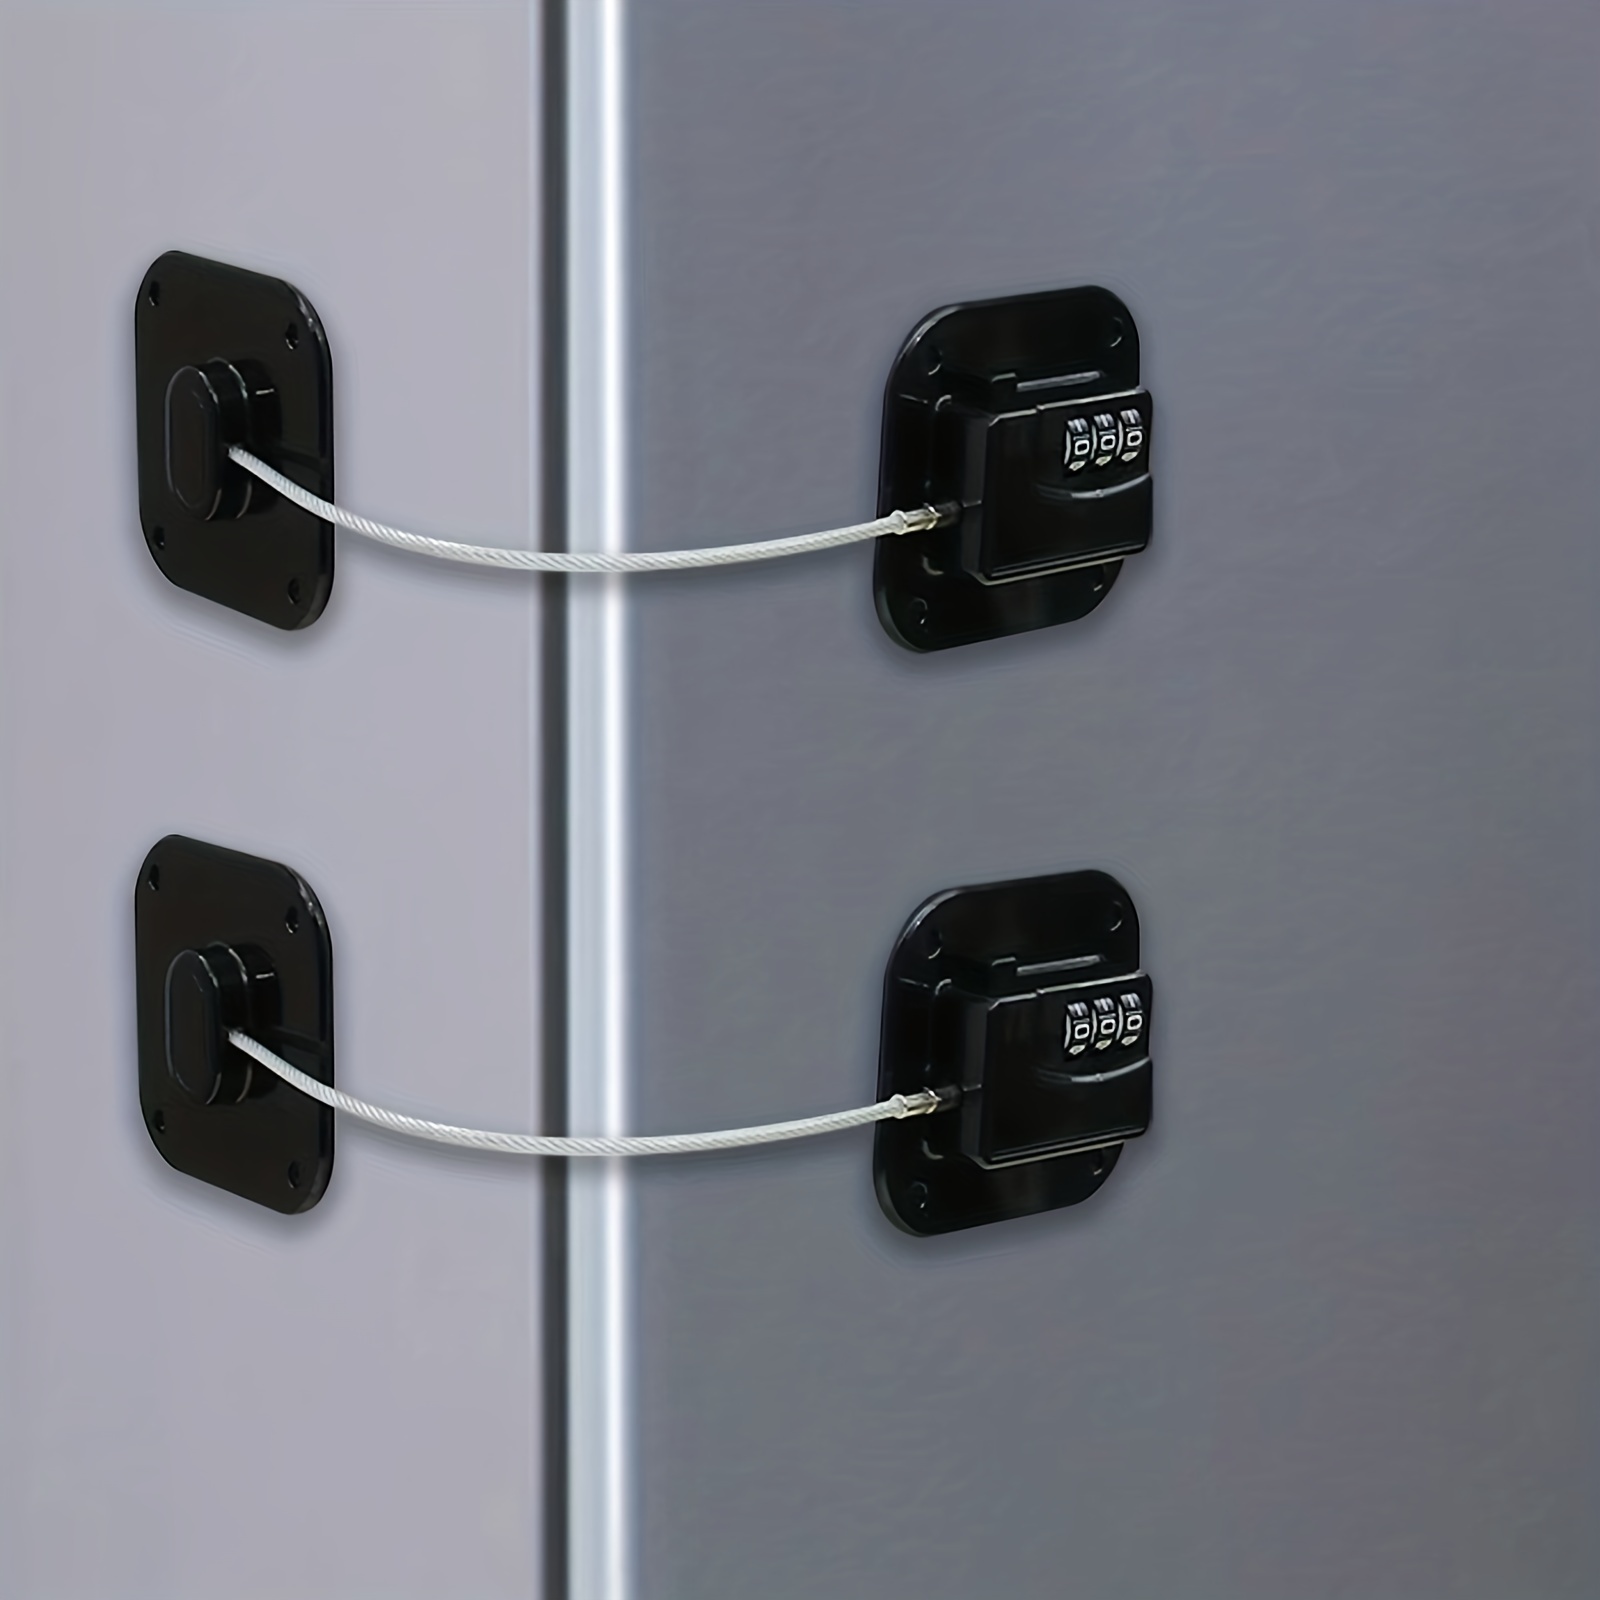  New Upgraded Fridge Locks For Kids, 4 Pack Refrigerator Lock  Child Proof Fridge Door Lock Safety First Freezer Lock For Upright Freezer  Lock Baby Proof